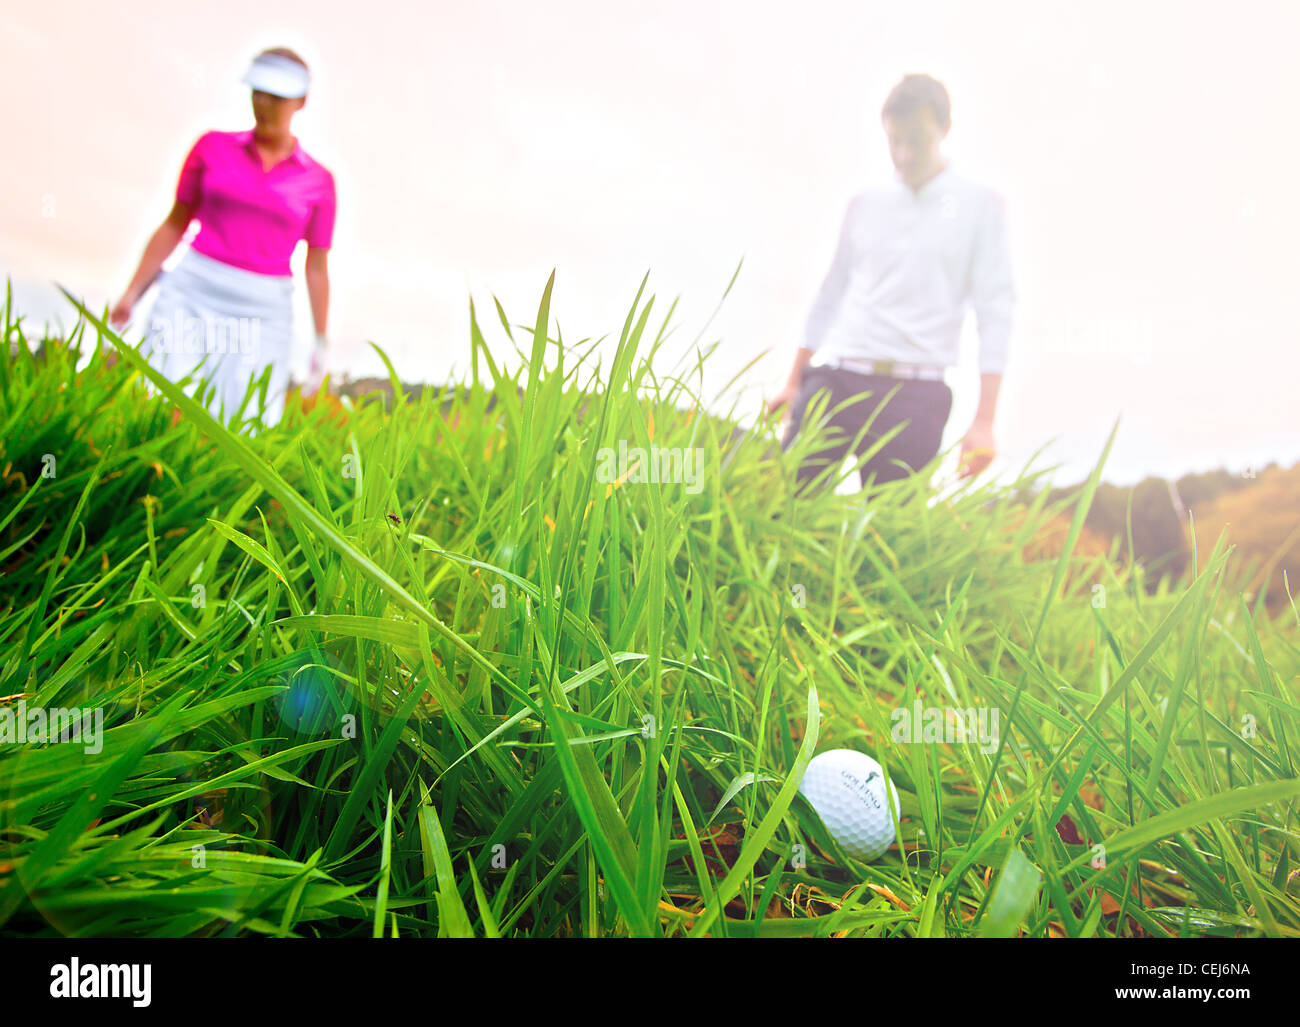 playing golf Stock Photo